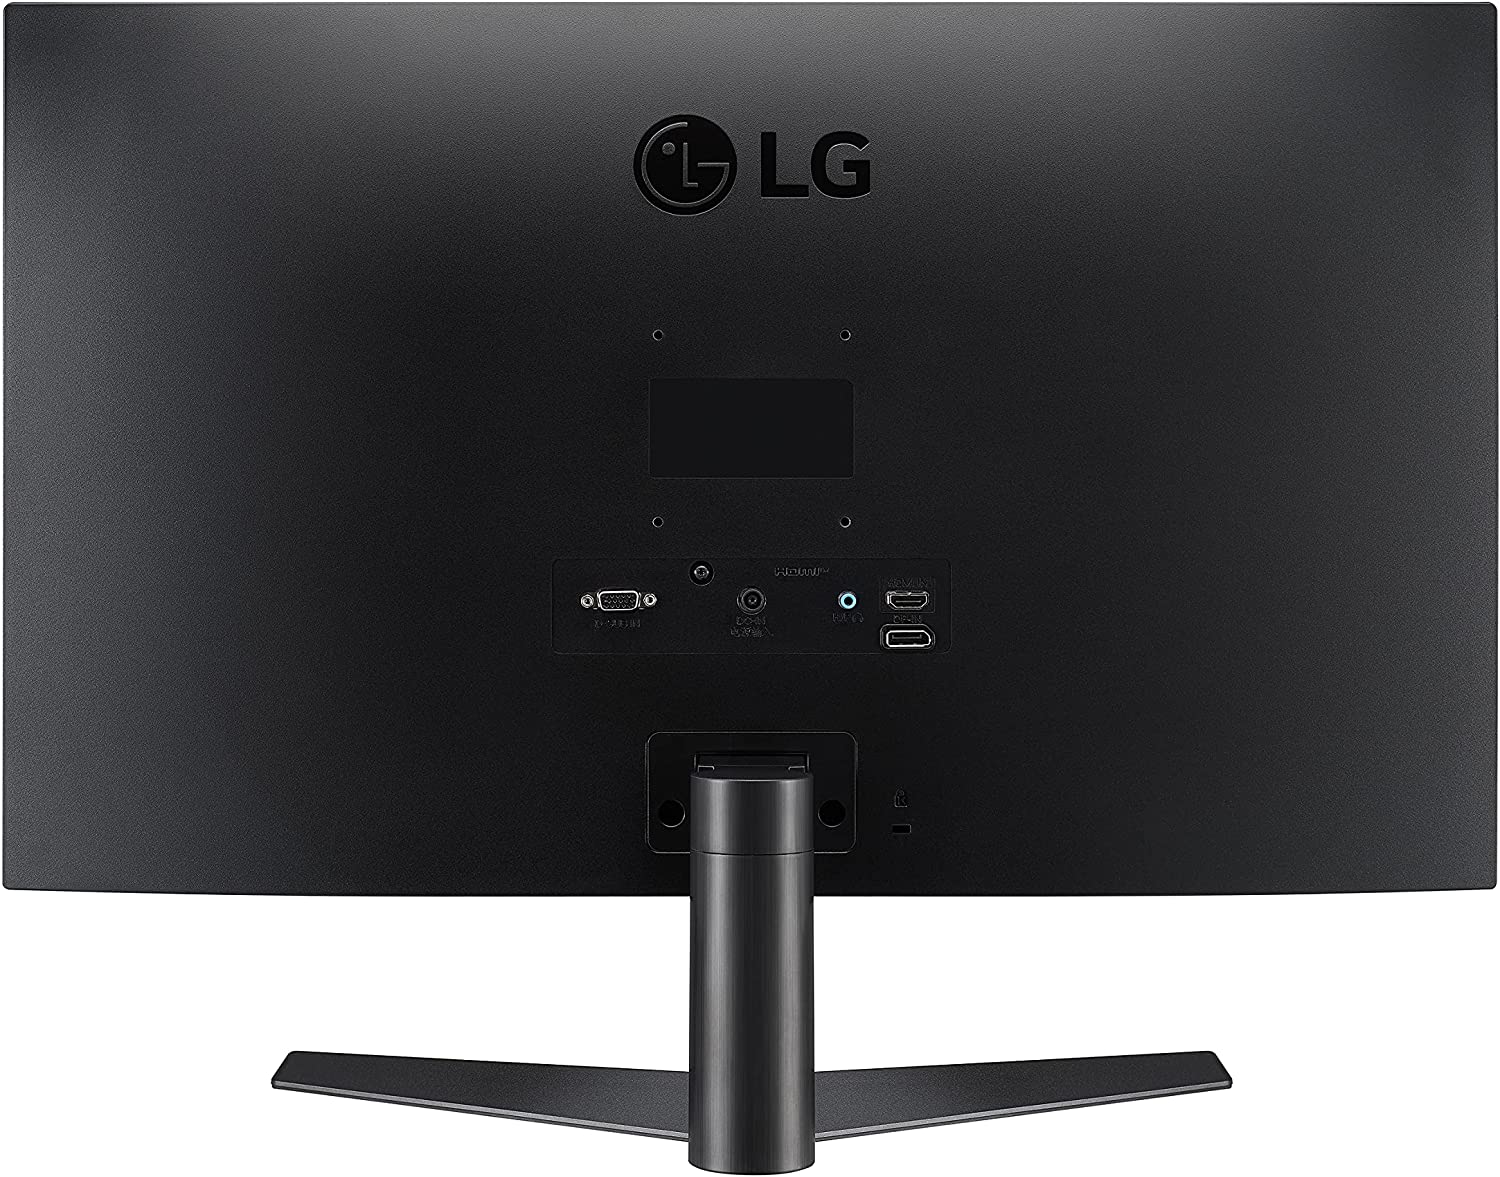 Monitor LG 24MP60G-P 24", Gamer, 1920x1080, Hdmi, Ips, Plano, Nuevo, garantia 1 año